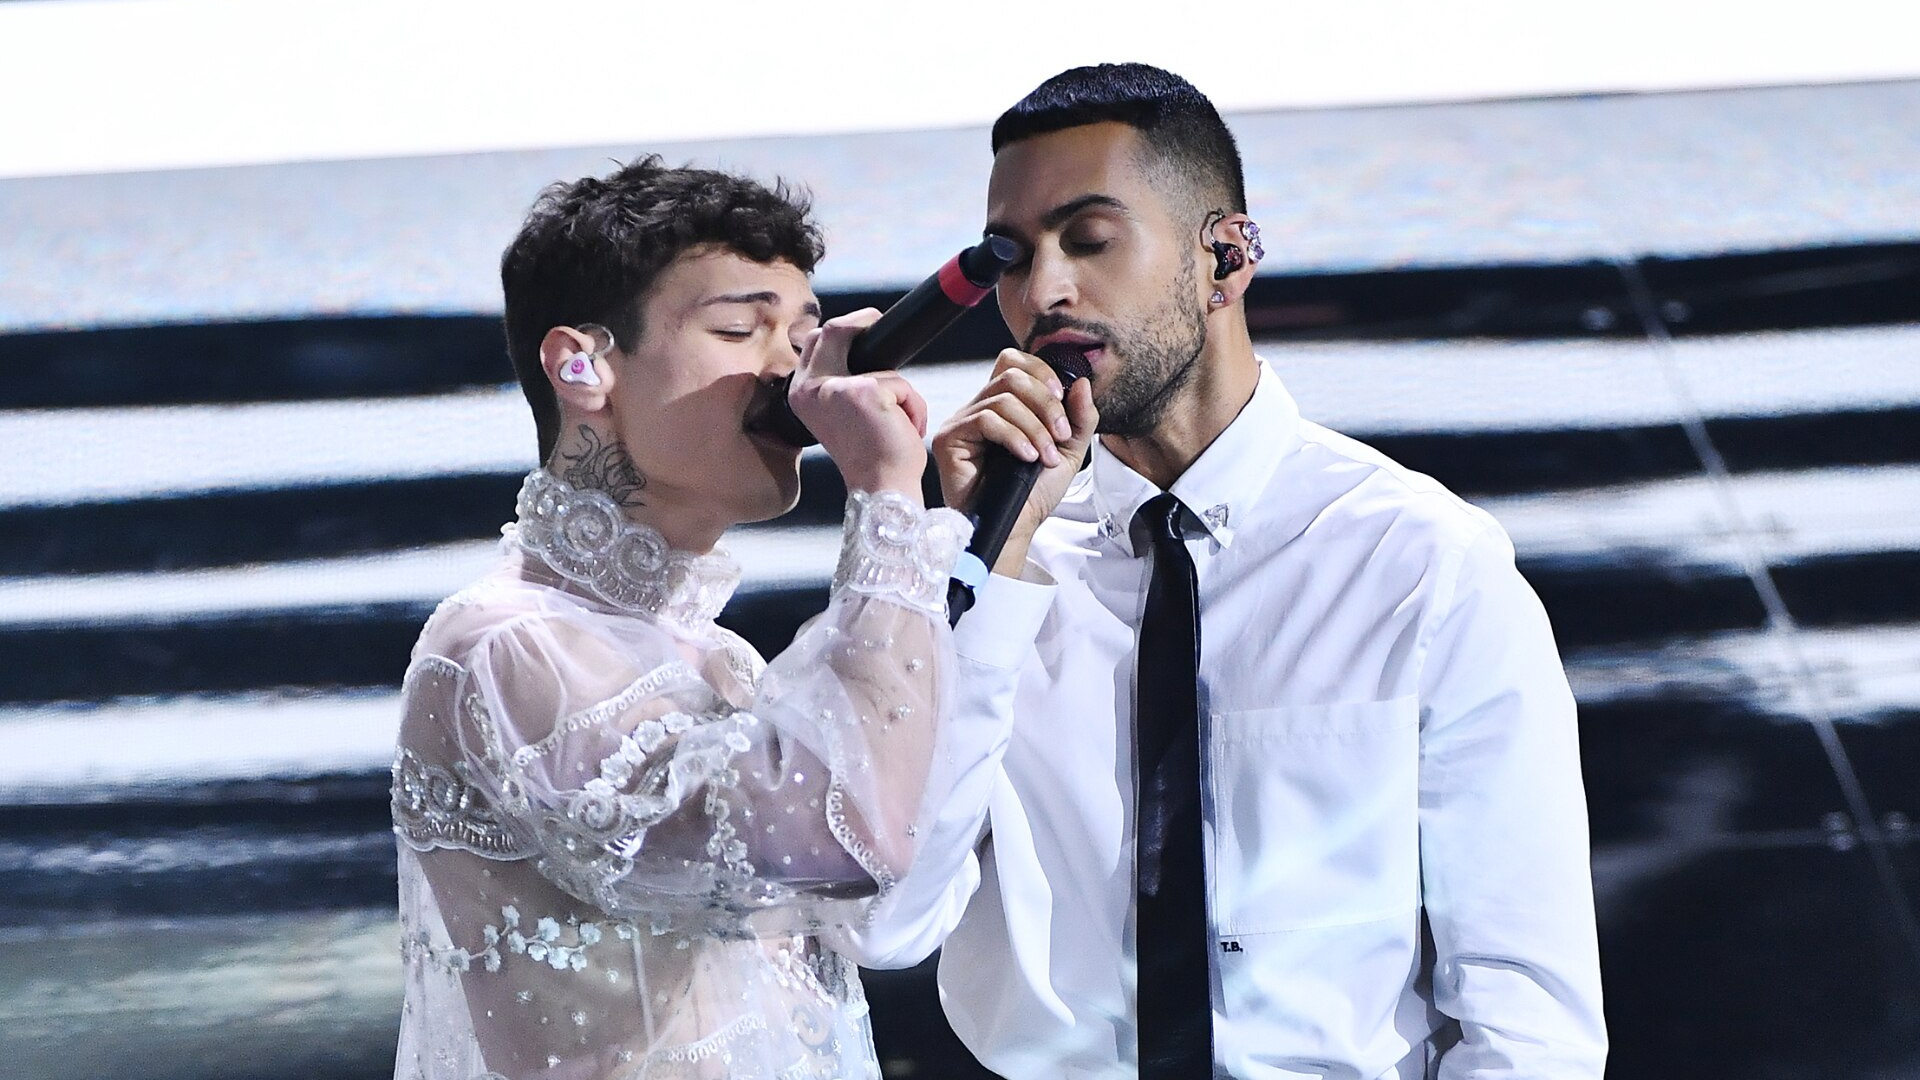 Meet Mahmood & BLANCO, Italy representatives in Eurovision 2022